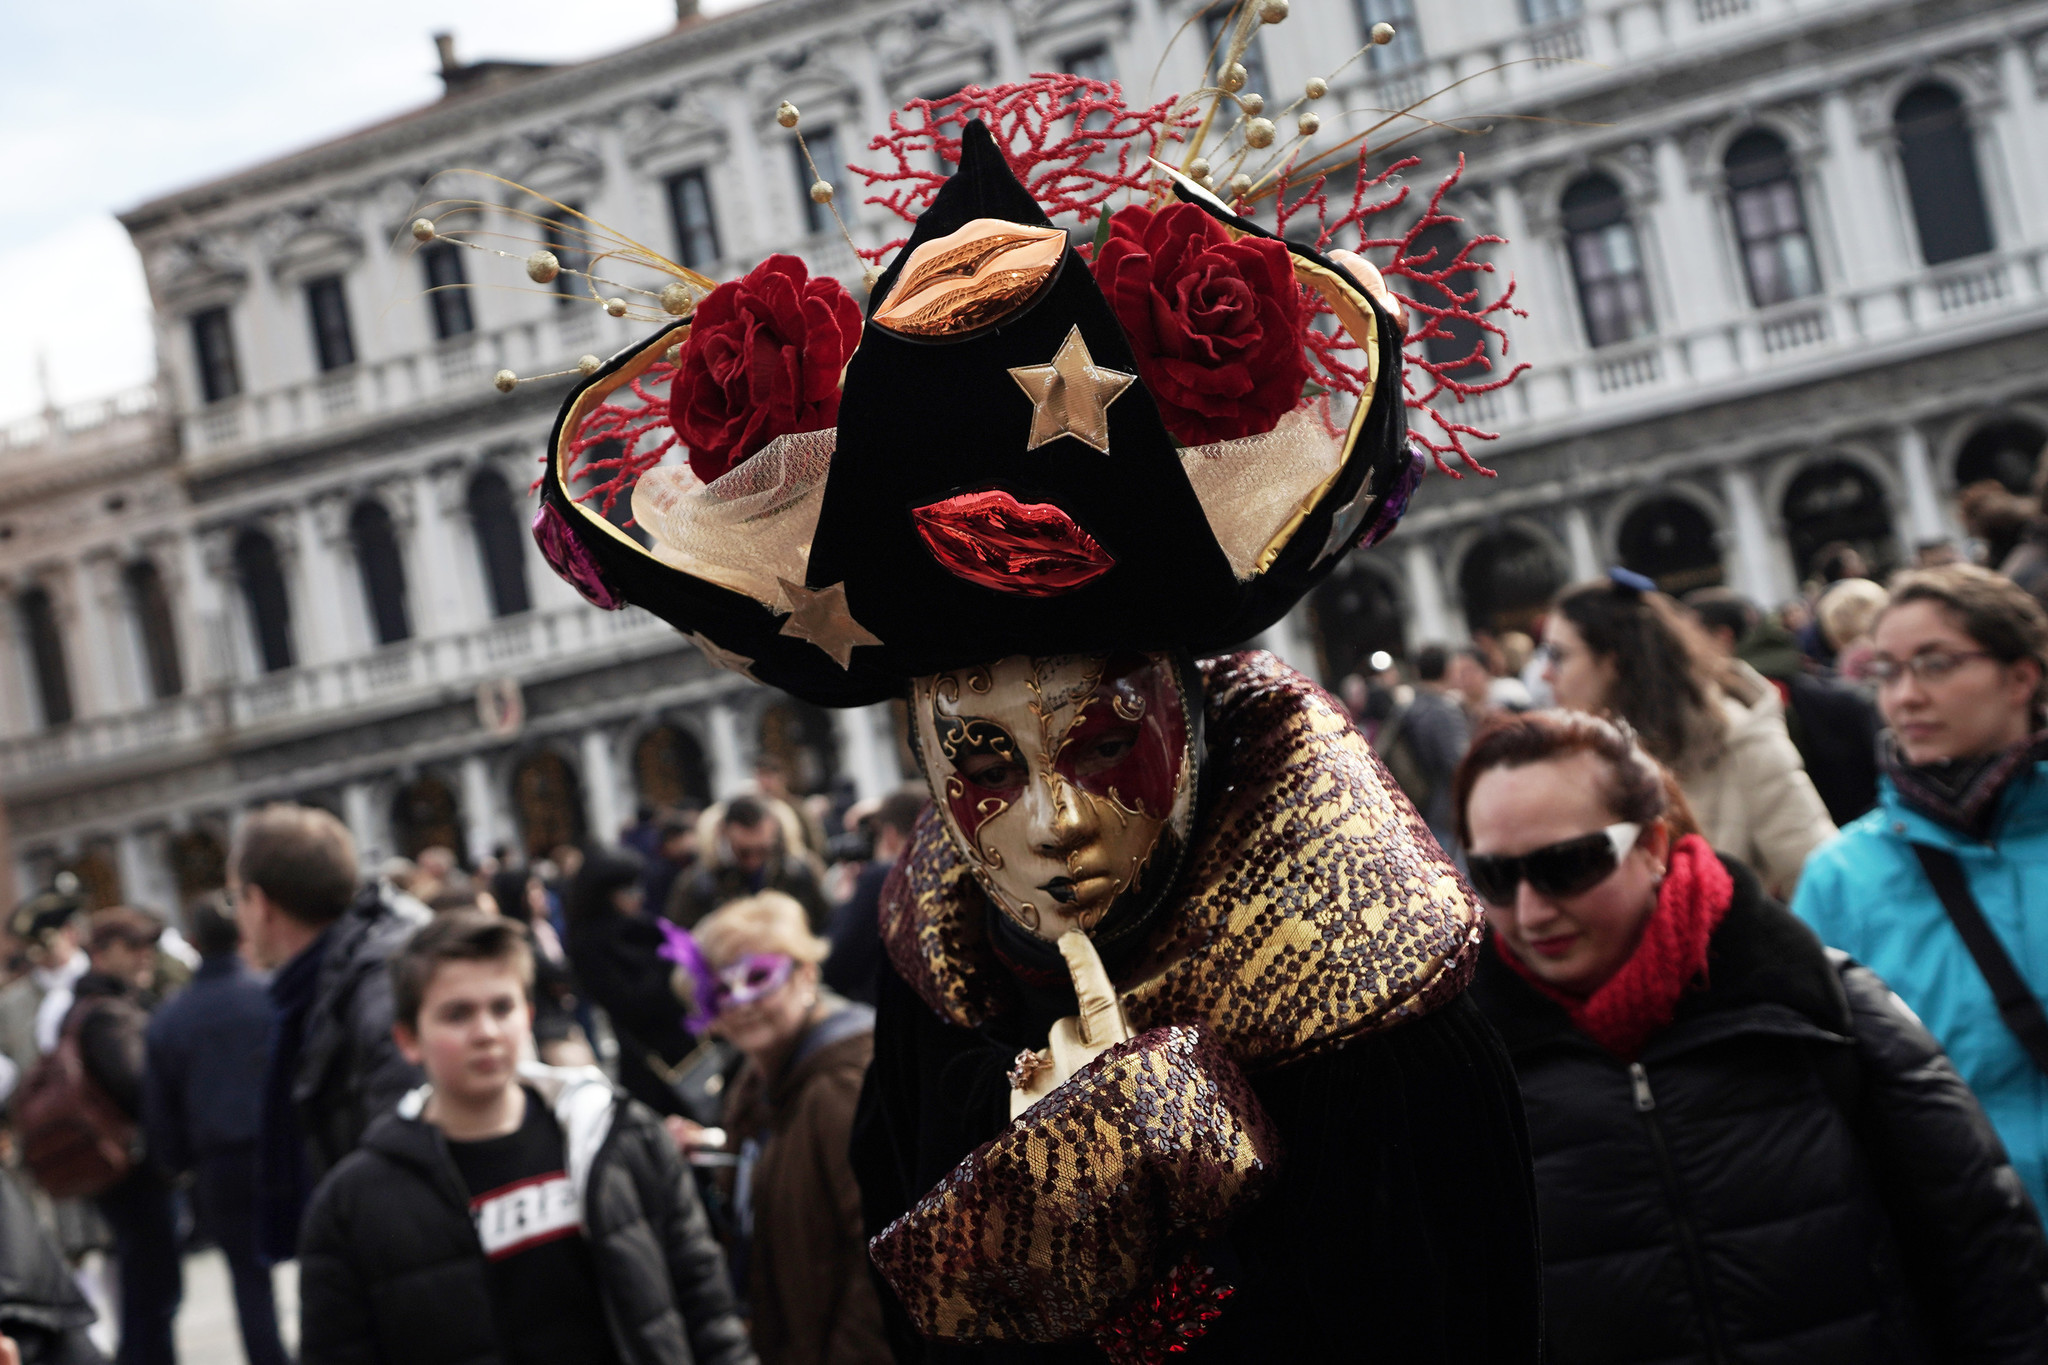 Italy cancels rest of famed Venice Carnival over coronavirus outbreak